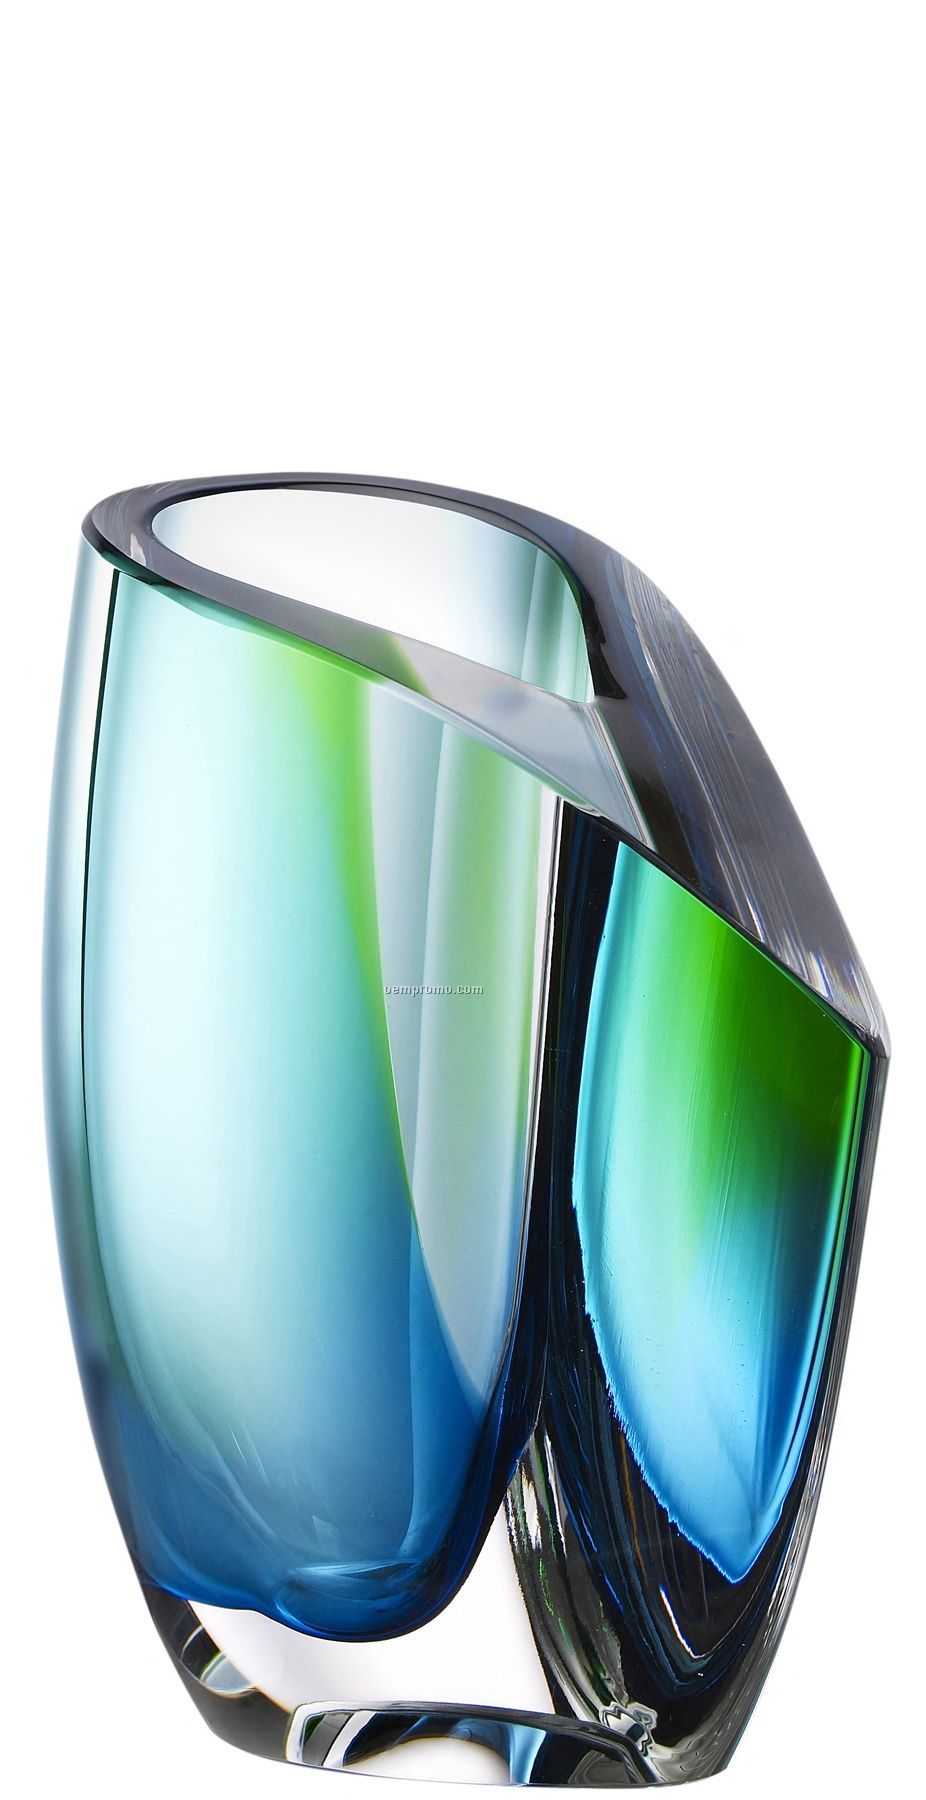 Mirage Small Glass Vase By Goran Warff (Blue & Green)